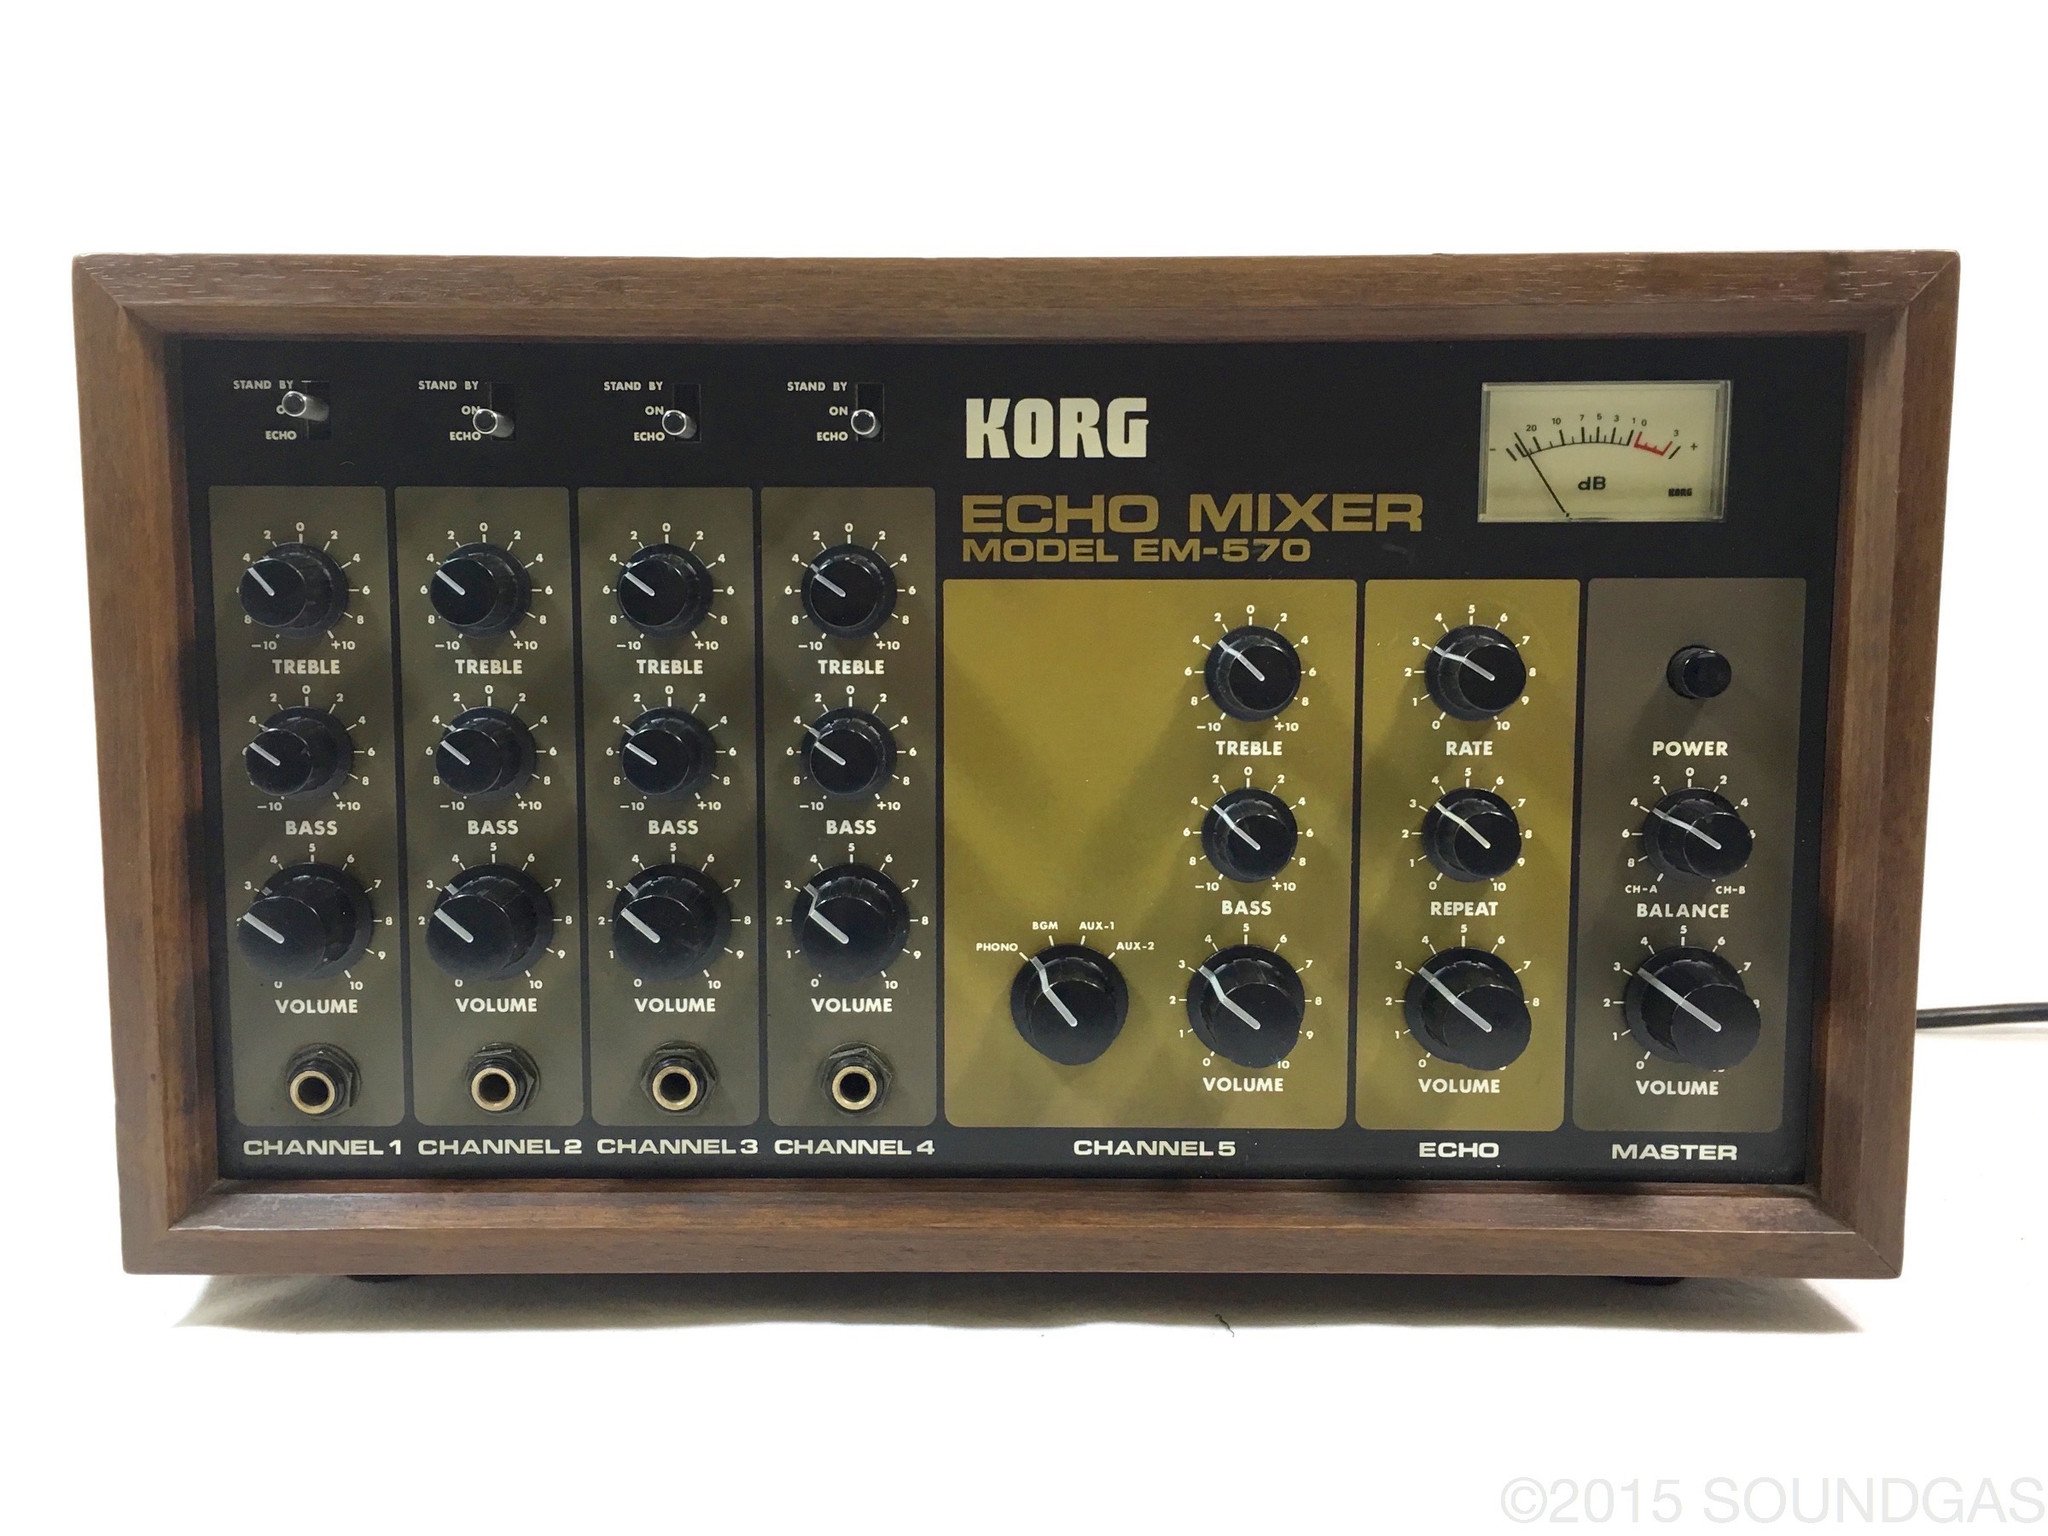 KORG ECHO MIXER EM-570 (MN-3005 delay)